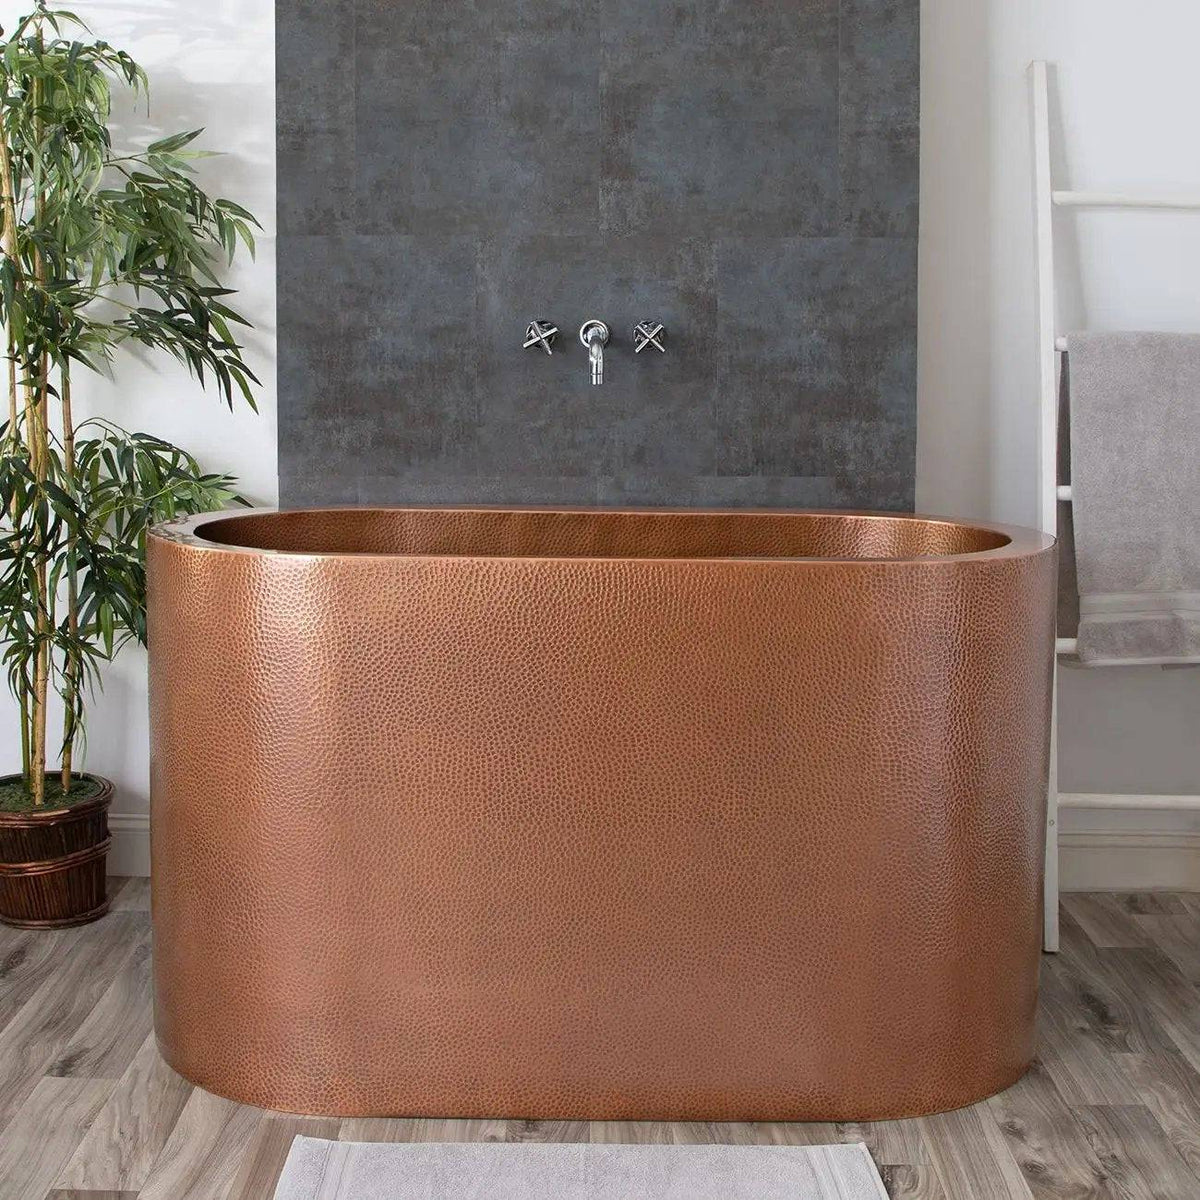 Fobest Handmade Double-Wall Custom Natural Copper Bathtub FDT-3